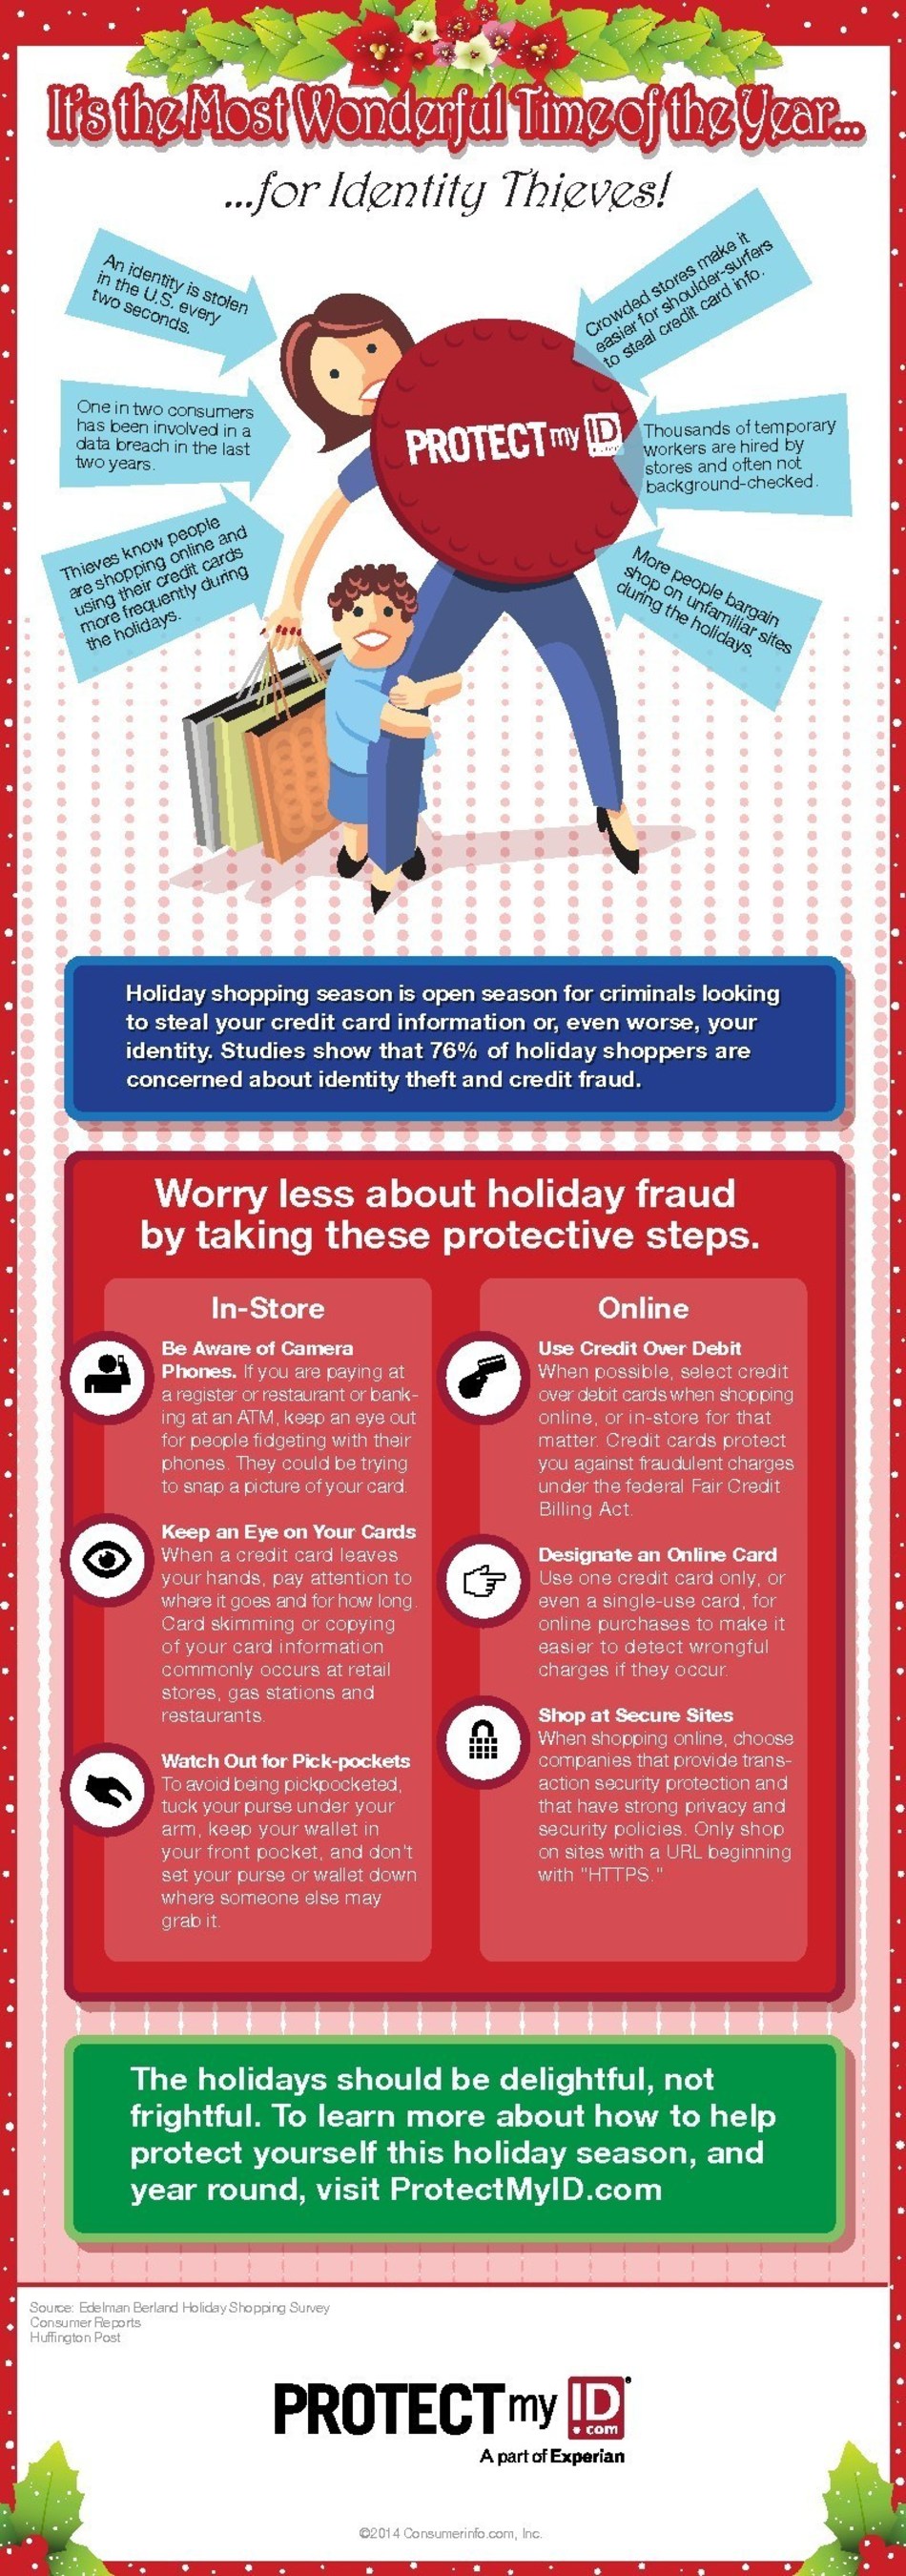 Holiday identity protection tips from Experian's ProtectMyID